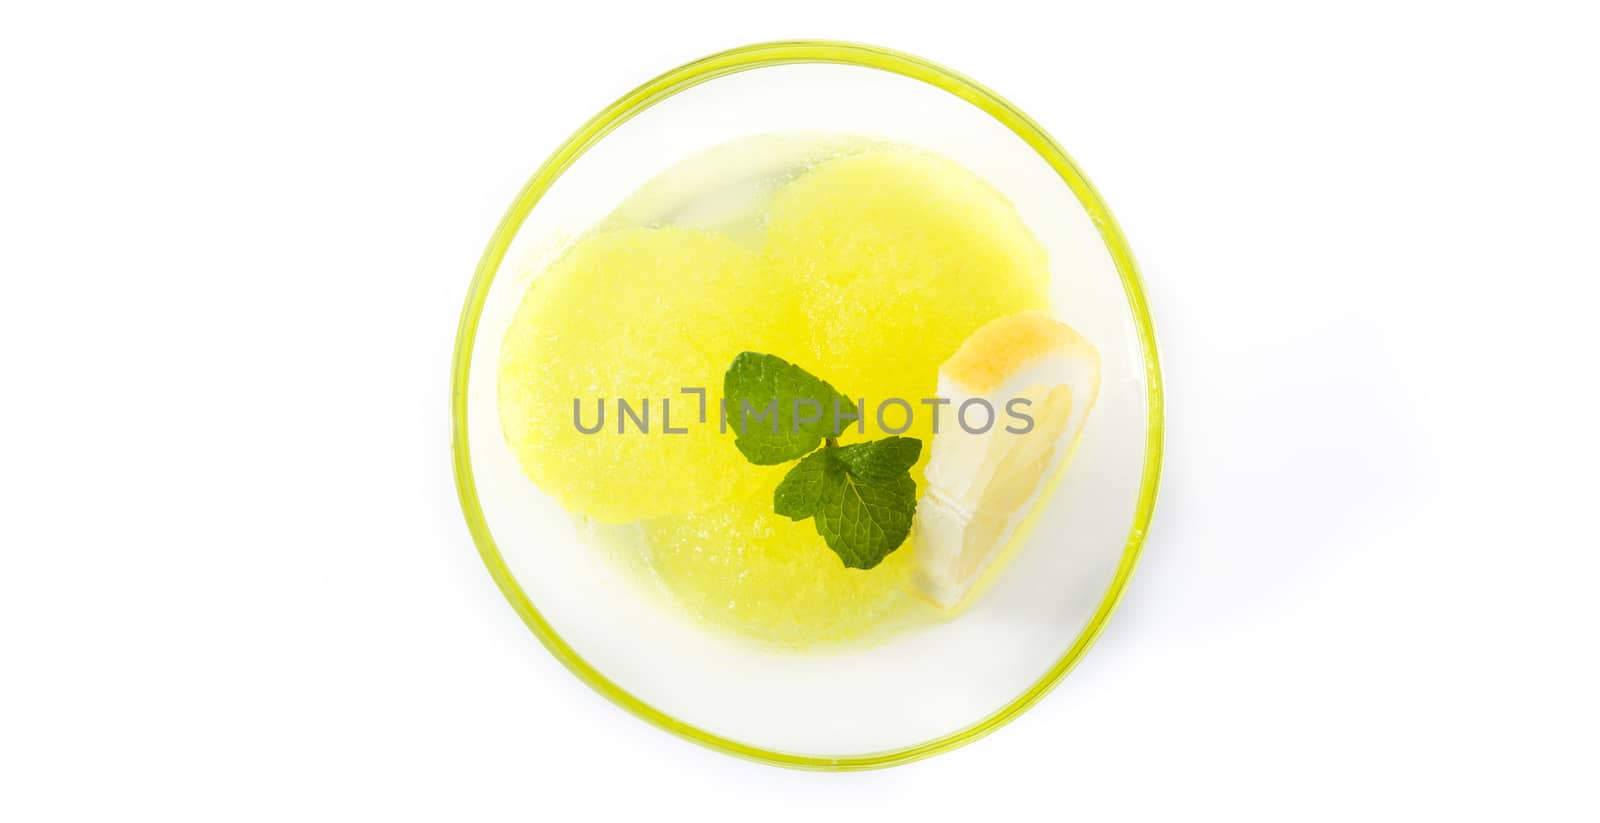 Lemon sorbet in glasses by chandlervid85